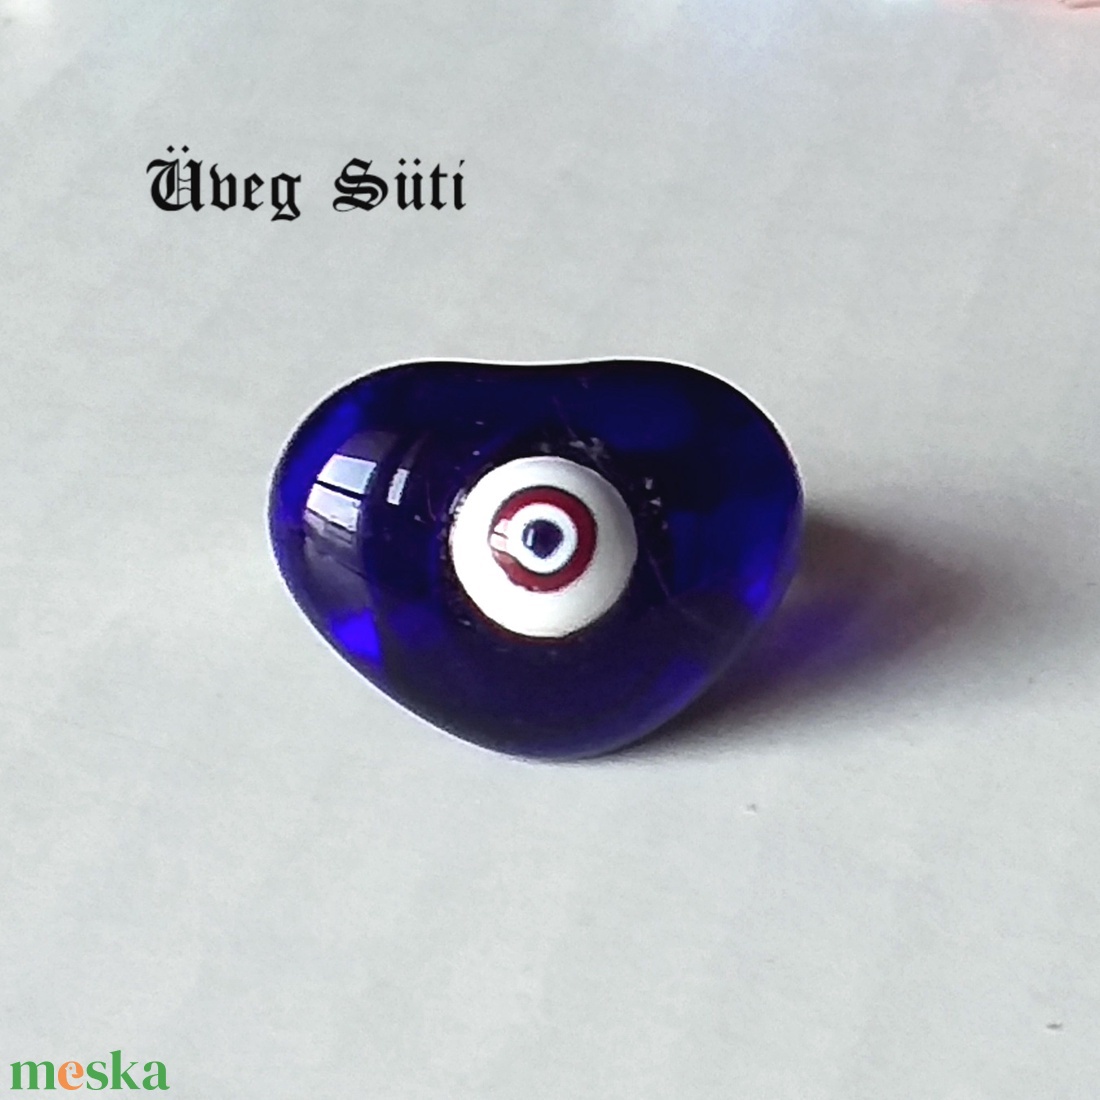 Labirintus Kék fehér piros szv gyűrű üvegékszer valentínnapra,  - ékszer - gyűrű - statement gyűrű - Meska.hu